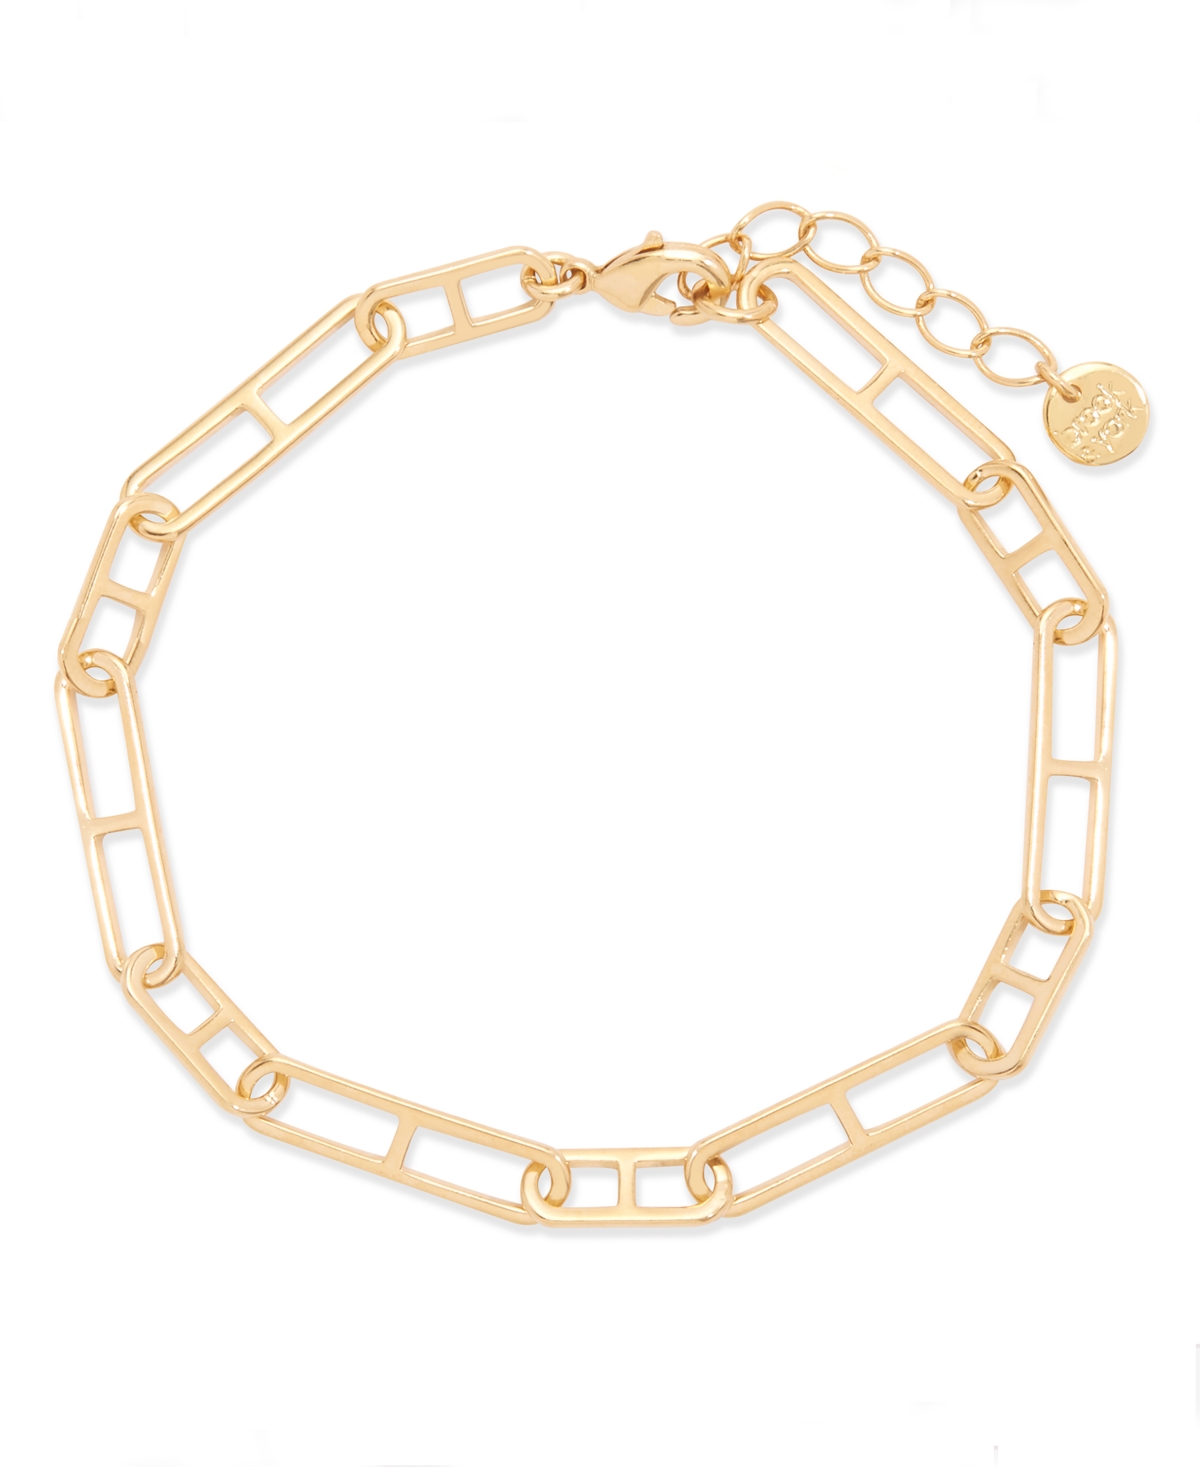 Brook & York 14k Gold-plated Finnley Chain Bracelet